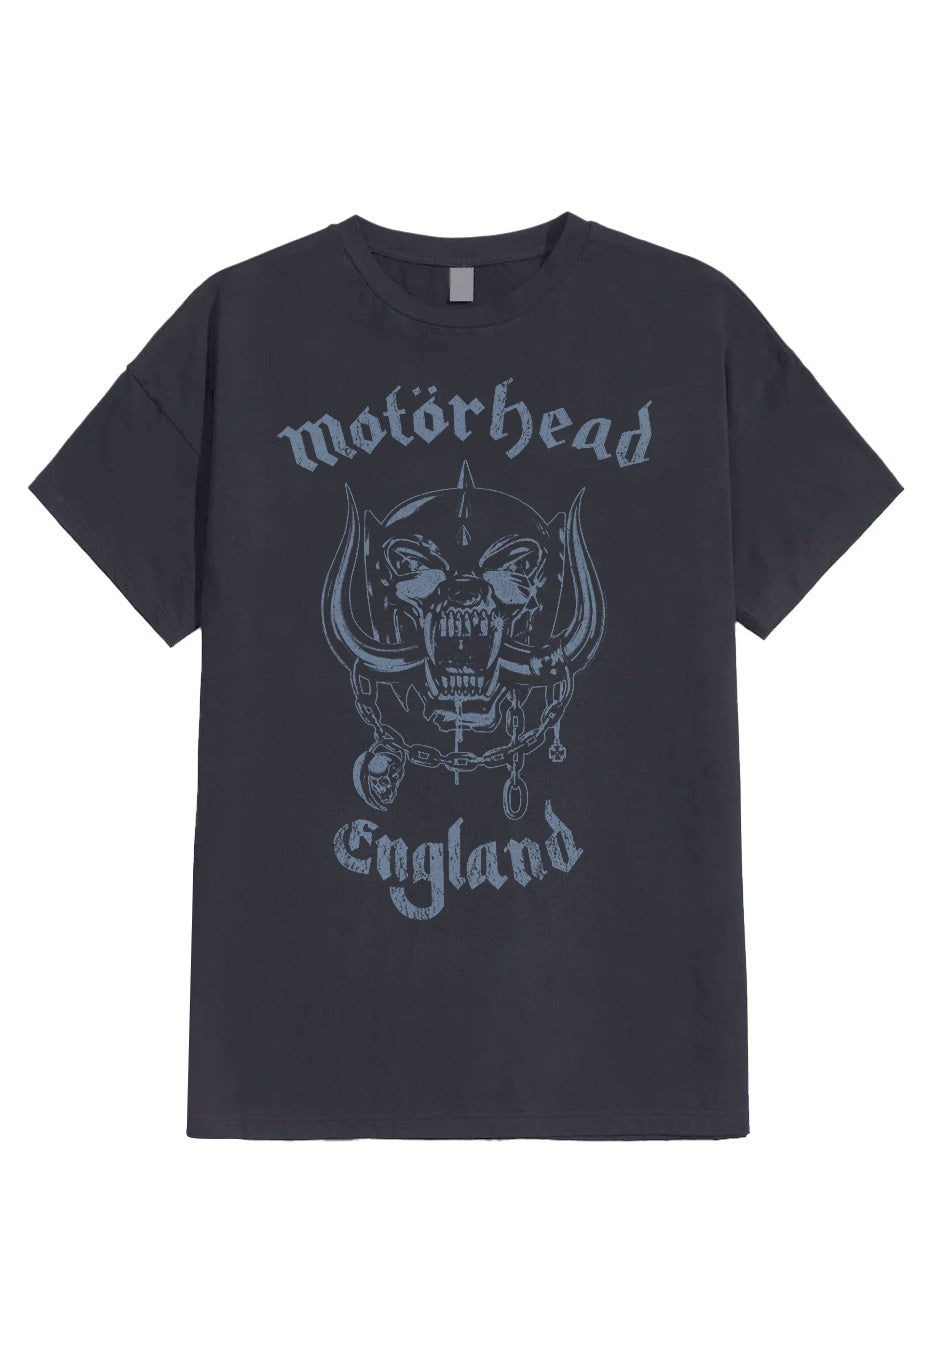 Motörhead - England Charcoal - T-Shirt